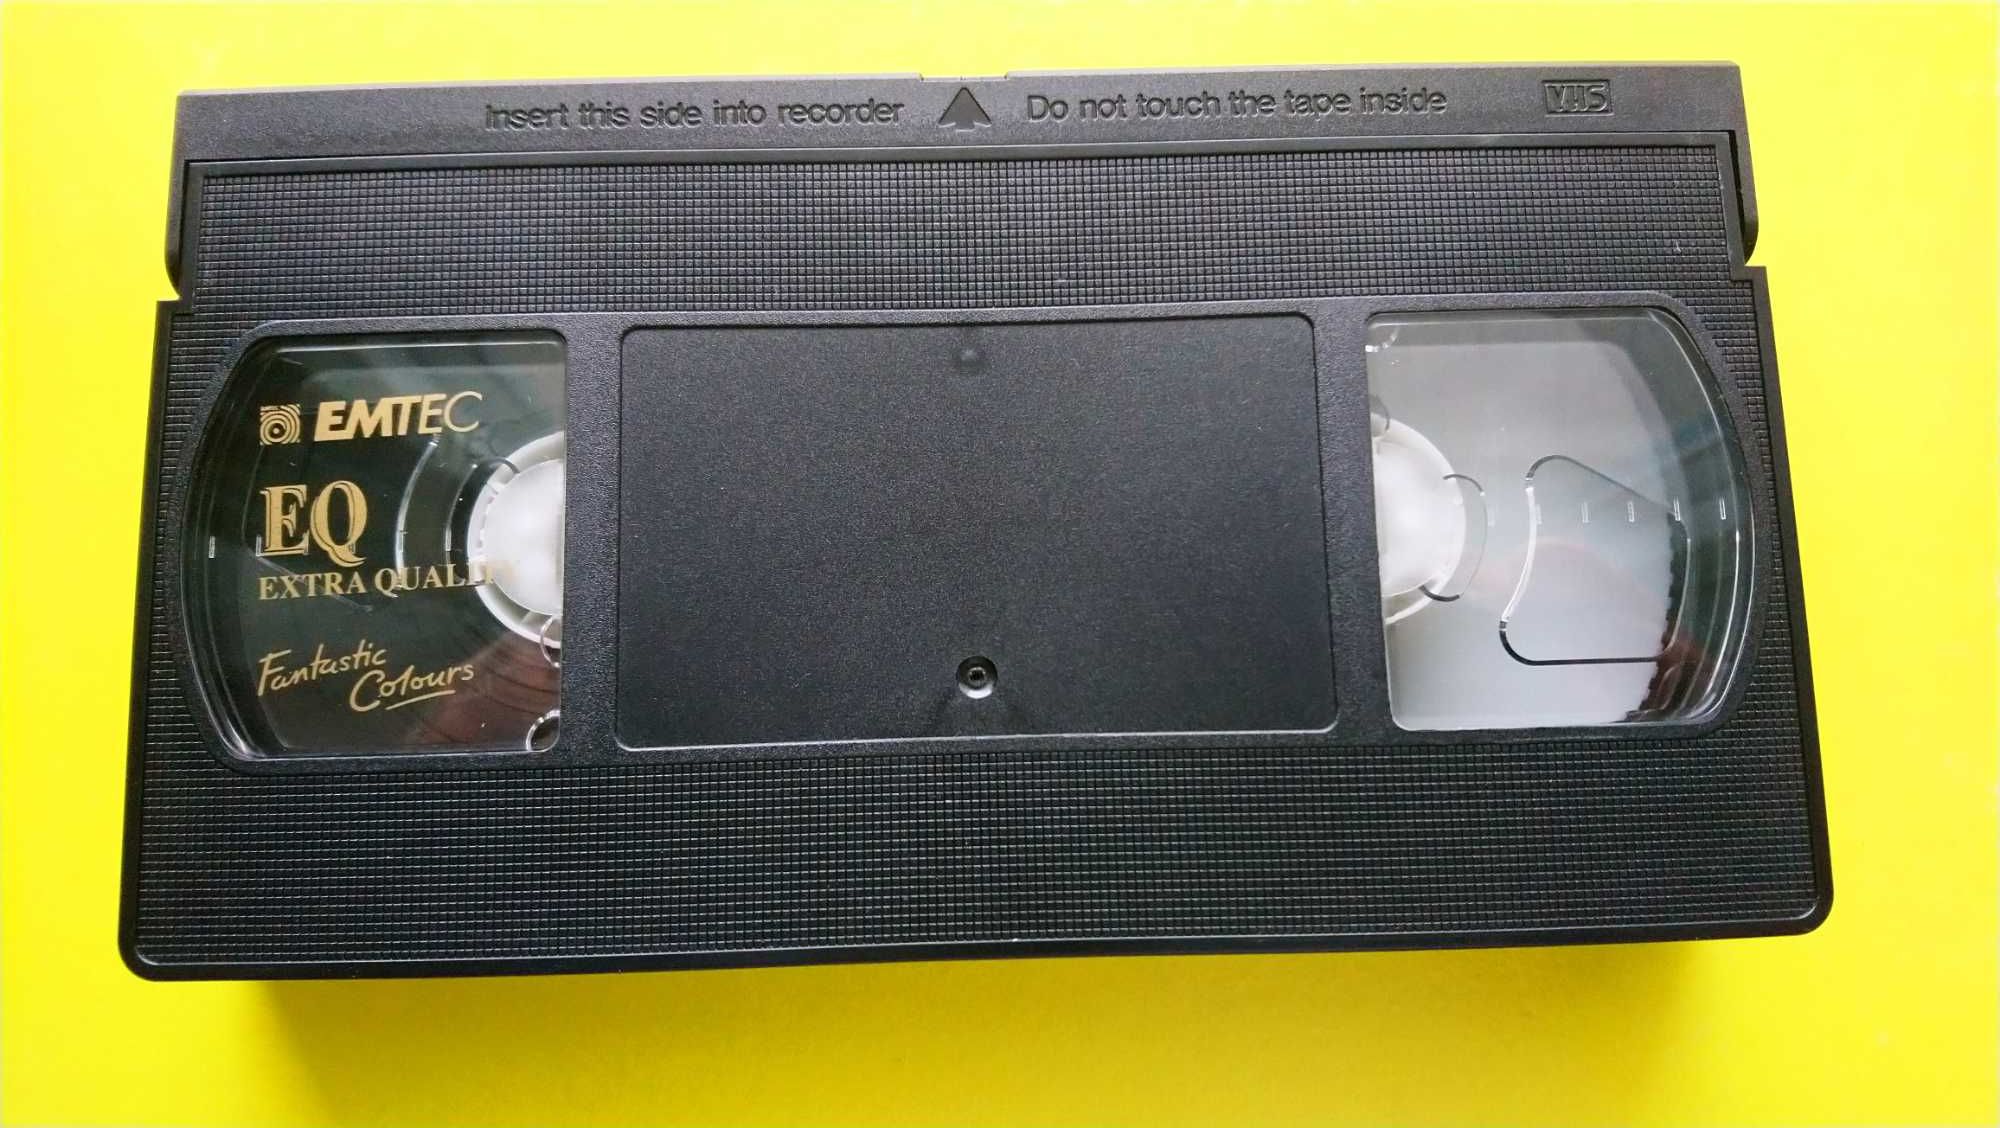 Видеокассеты VHS, відеокасети, видео кассеты, кассеты Sony і EMTEC